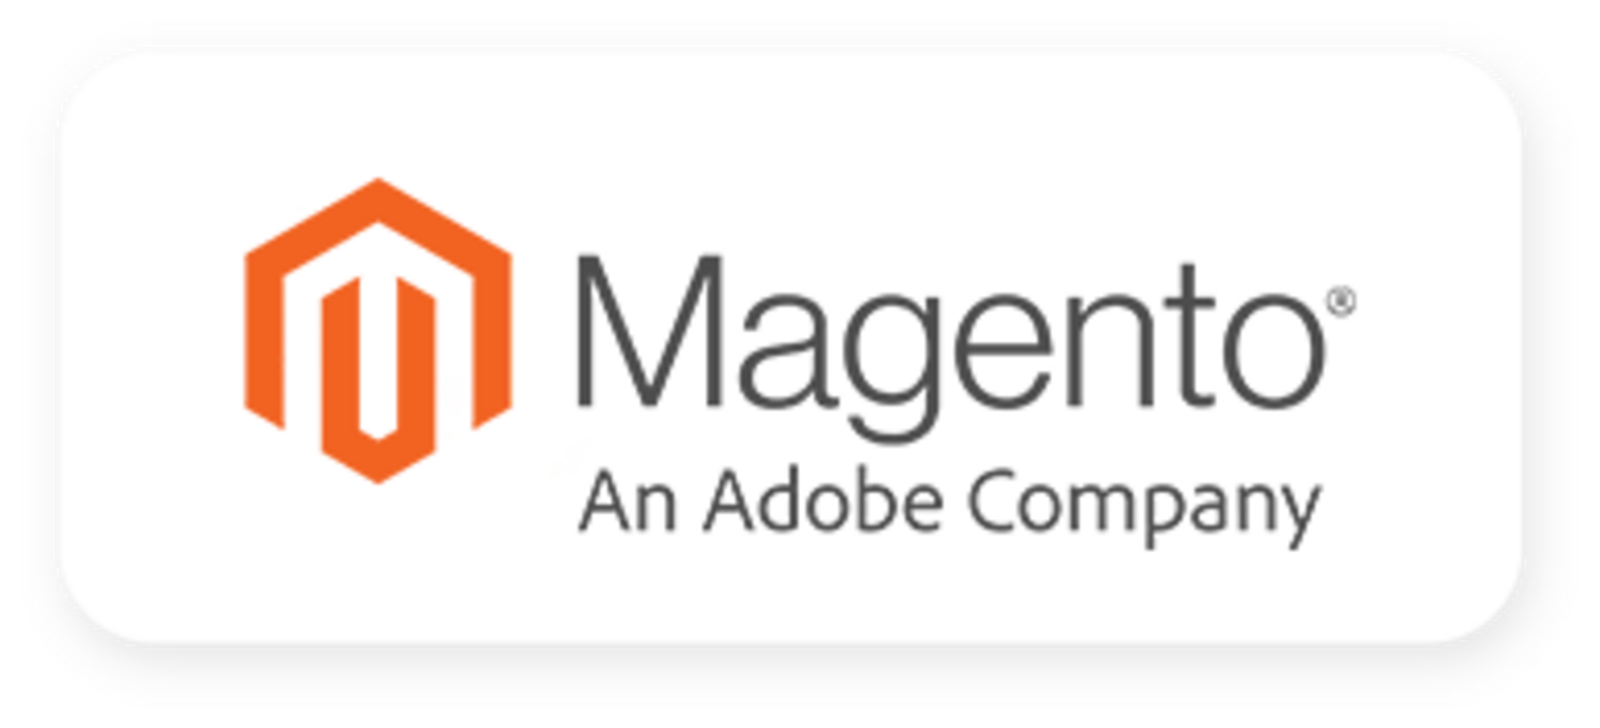 Logo Magento Open Source Adobe Comapany